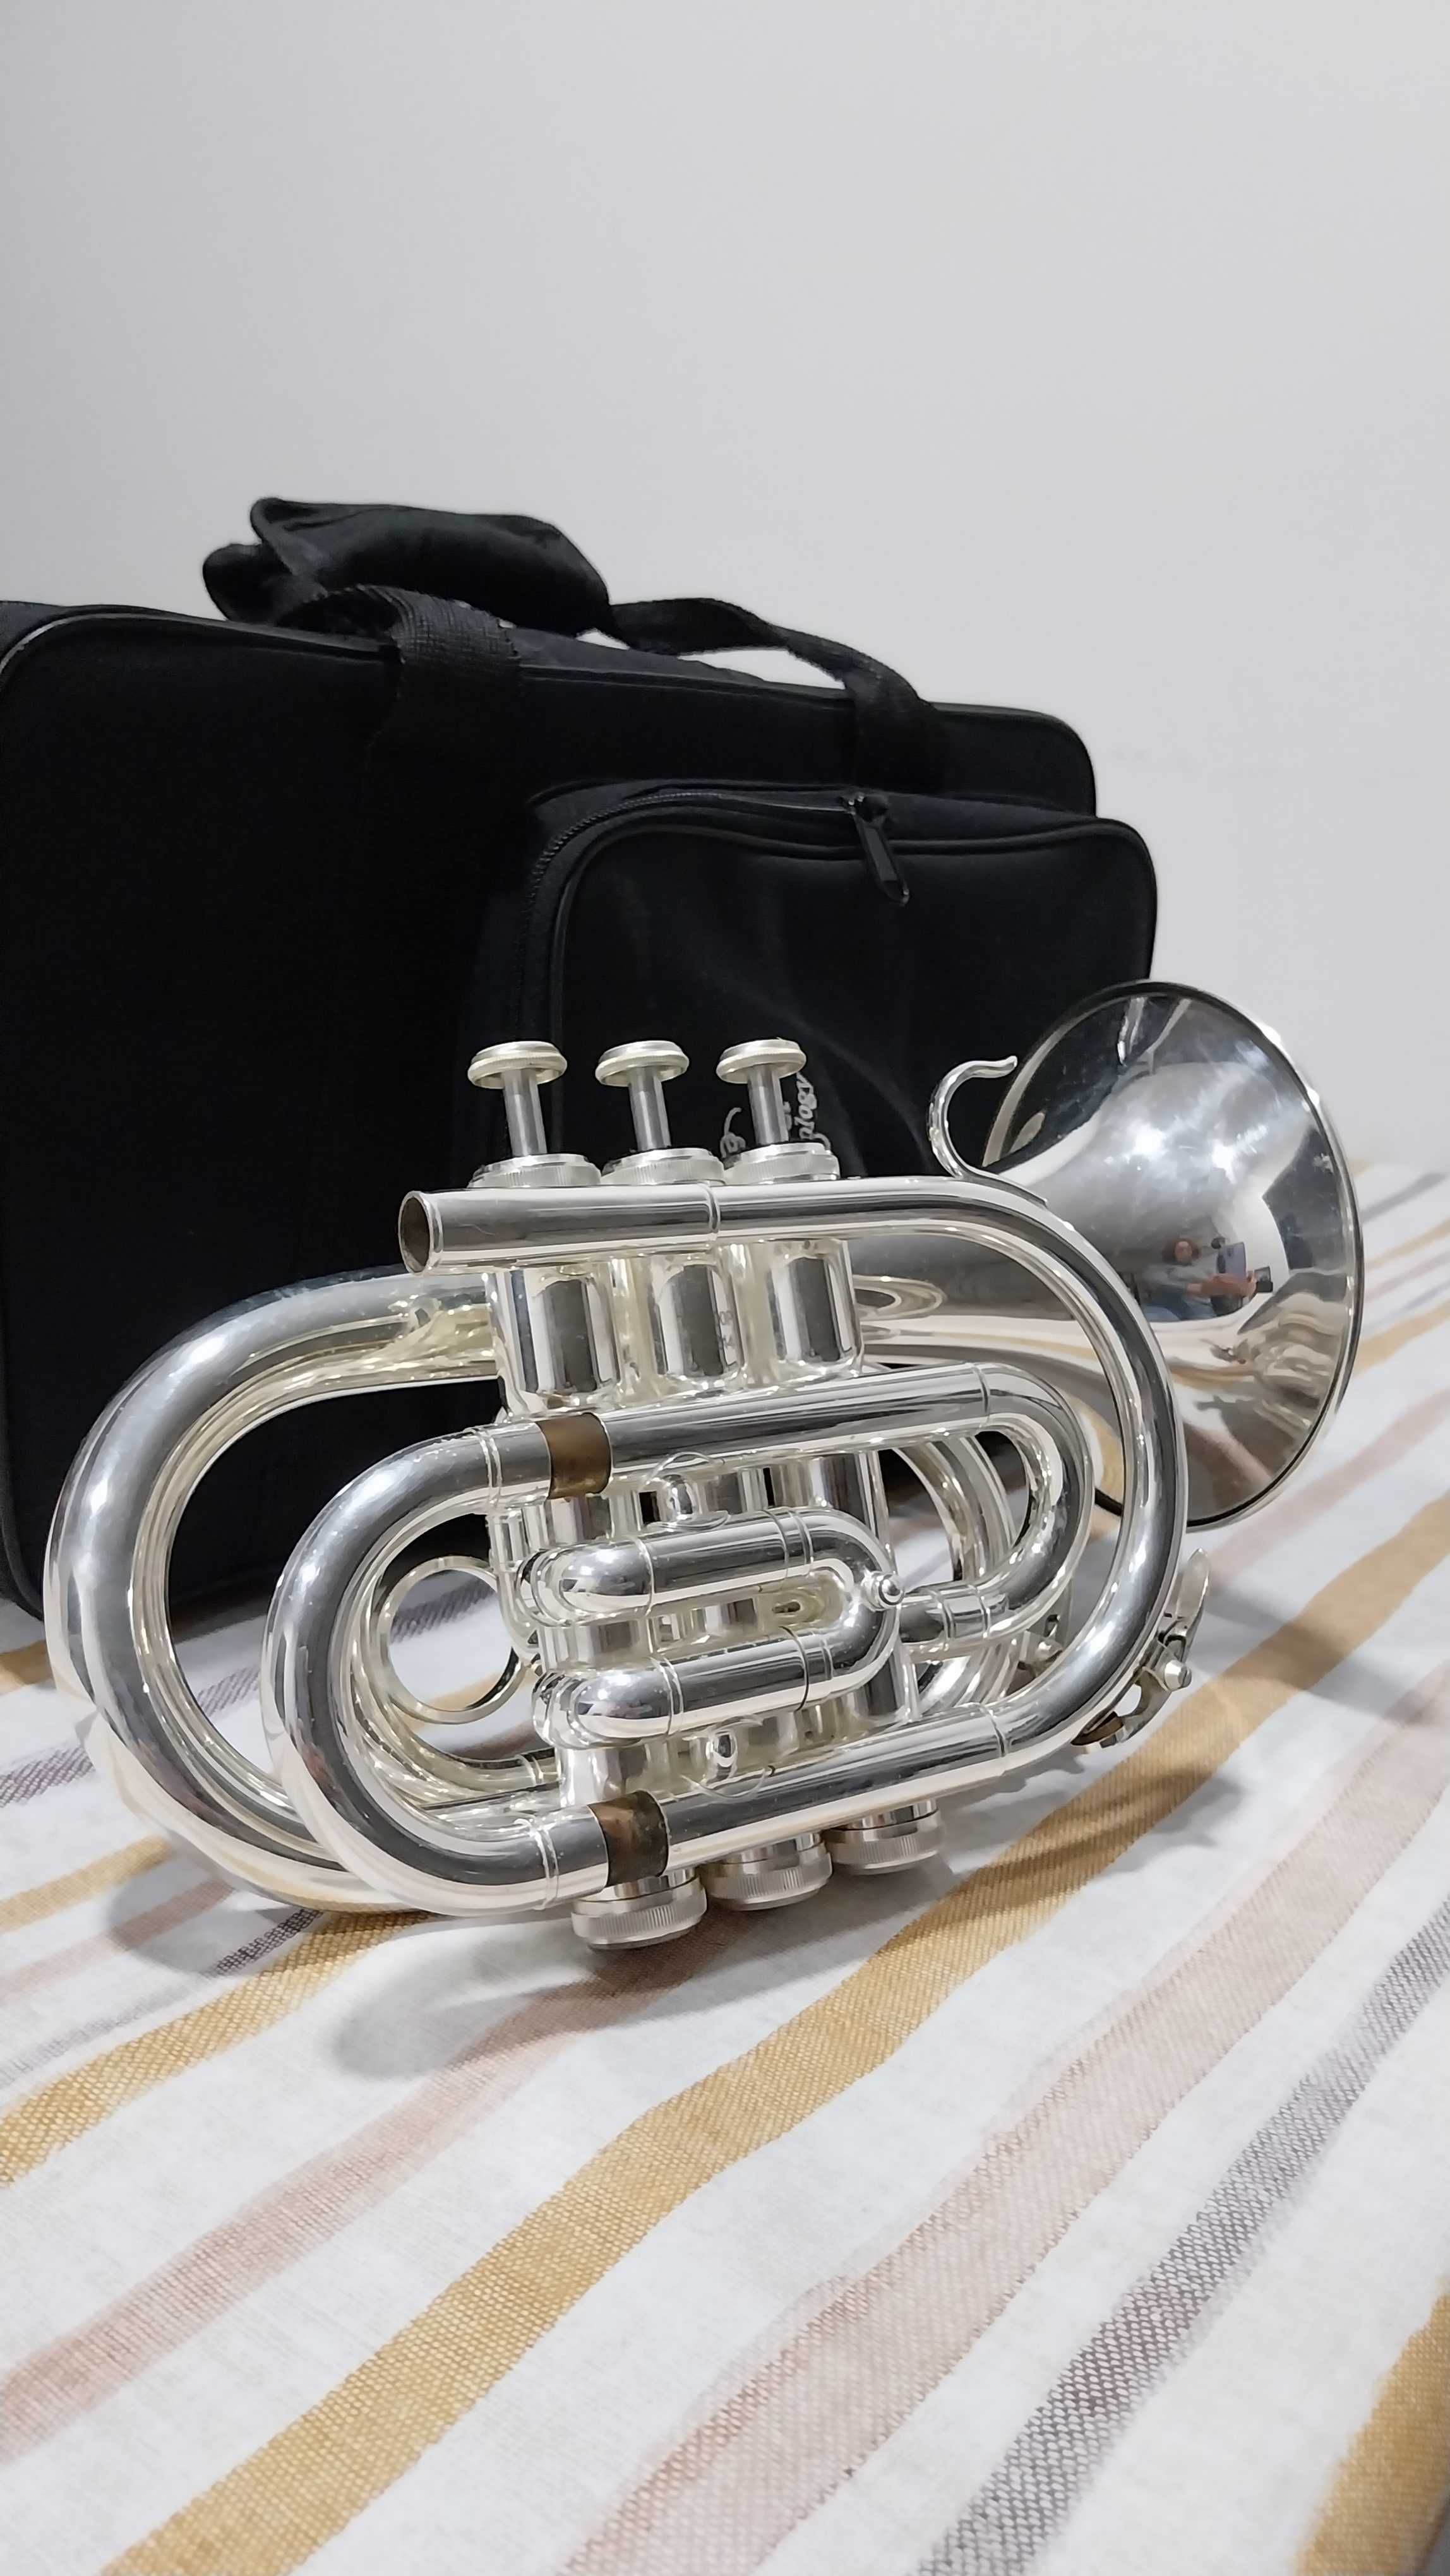 Trompete J Michael TR 400 pocket trumpet